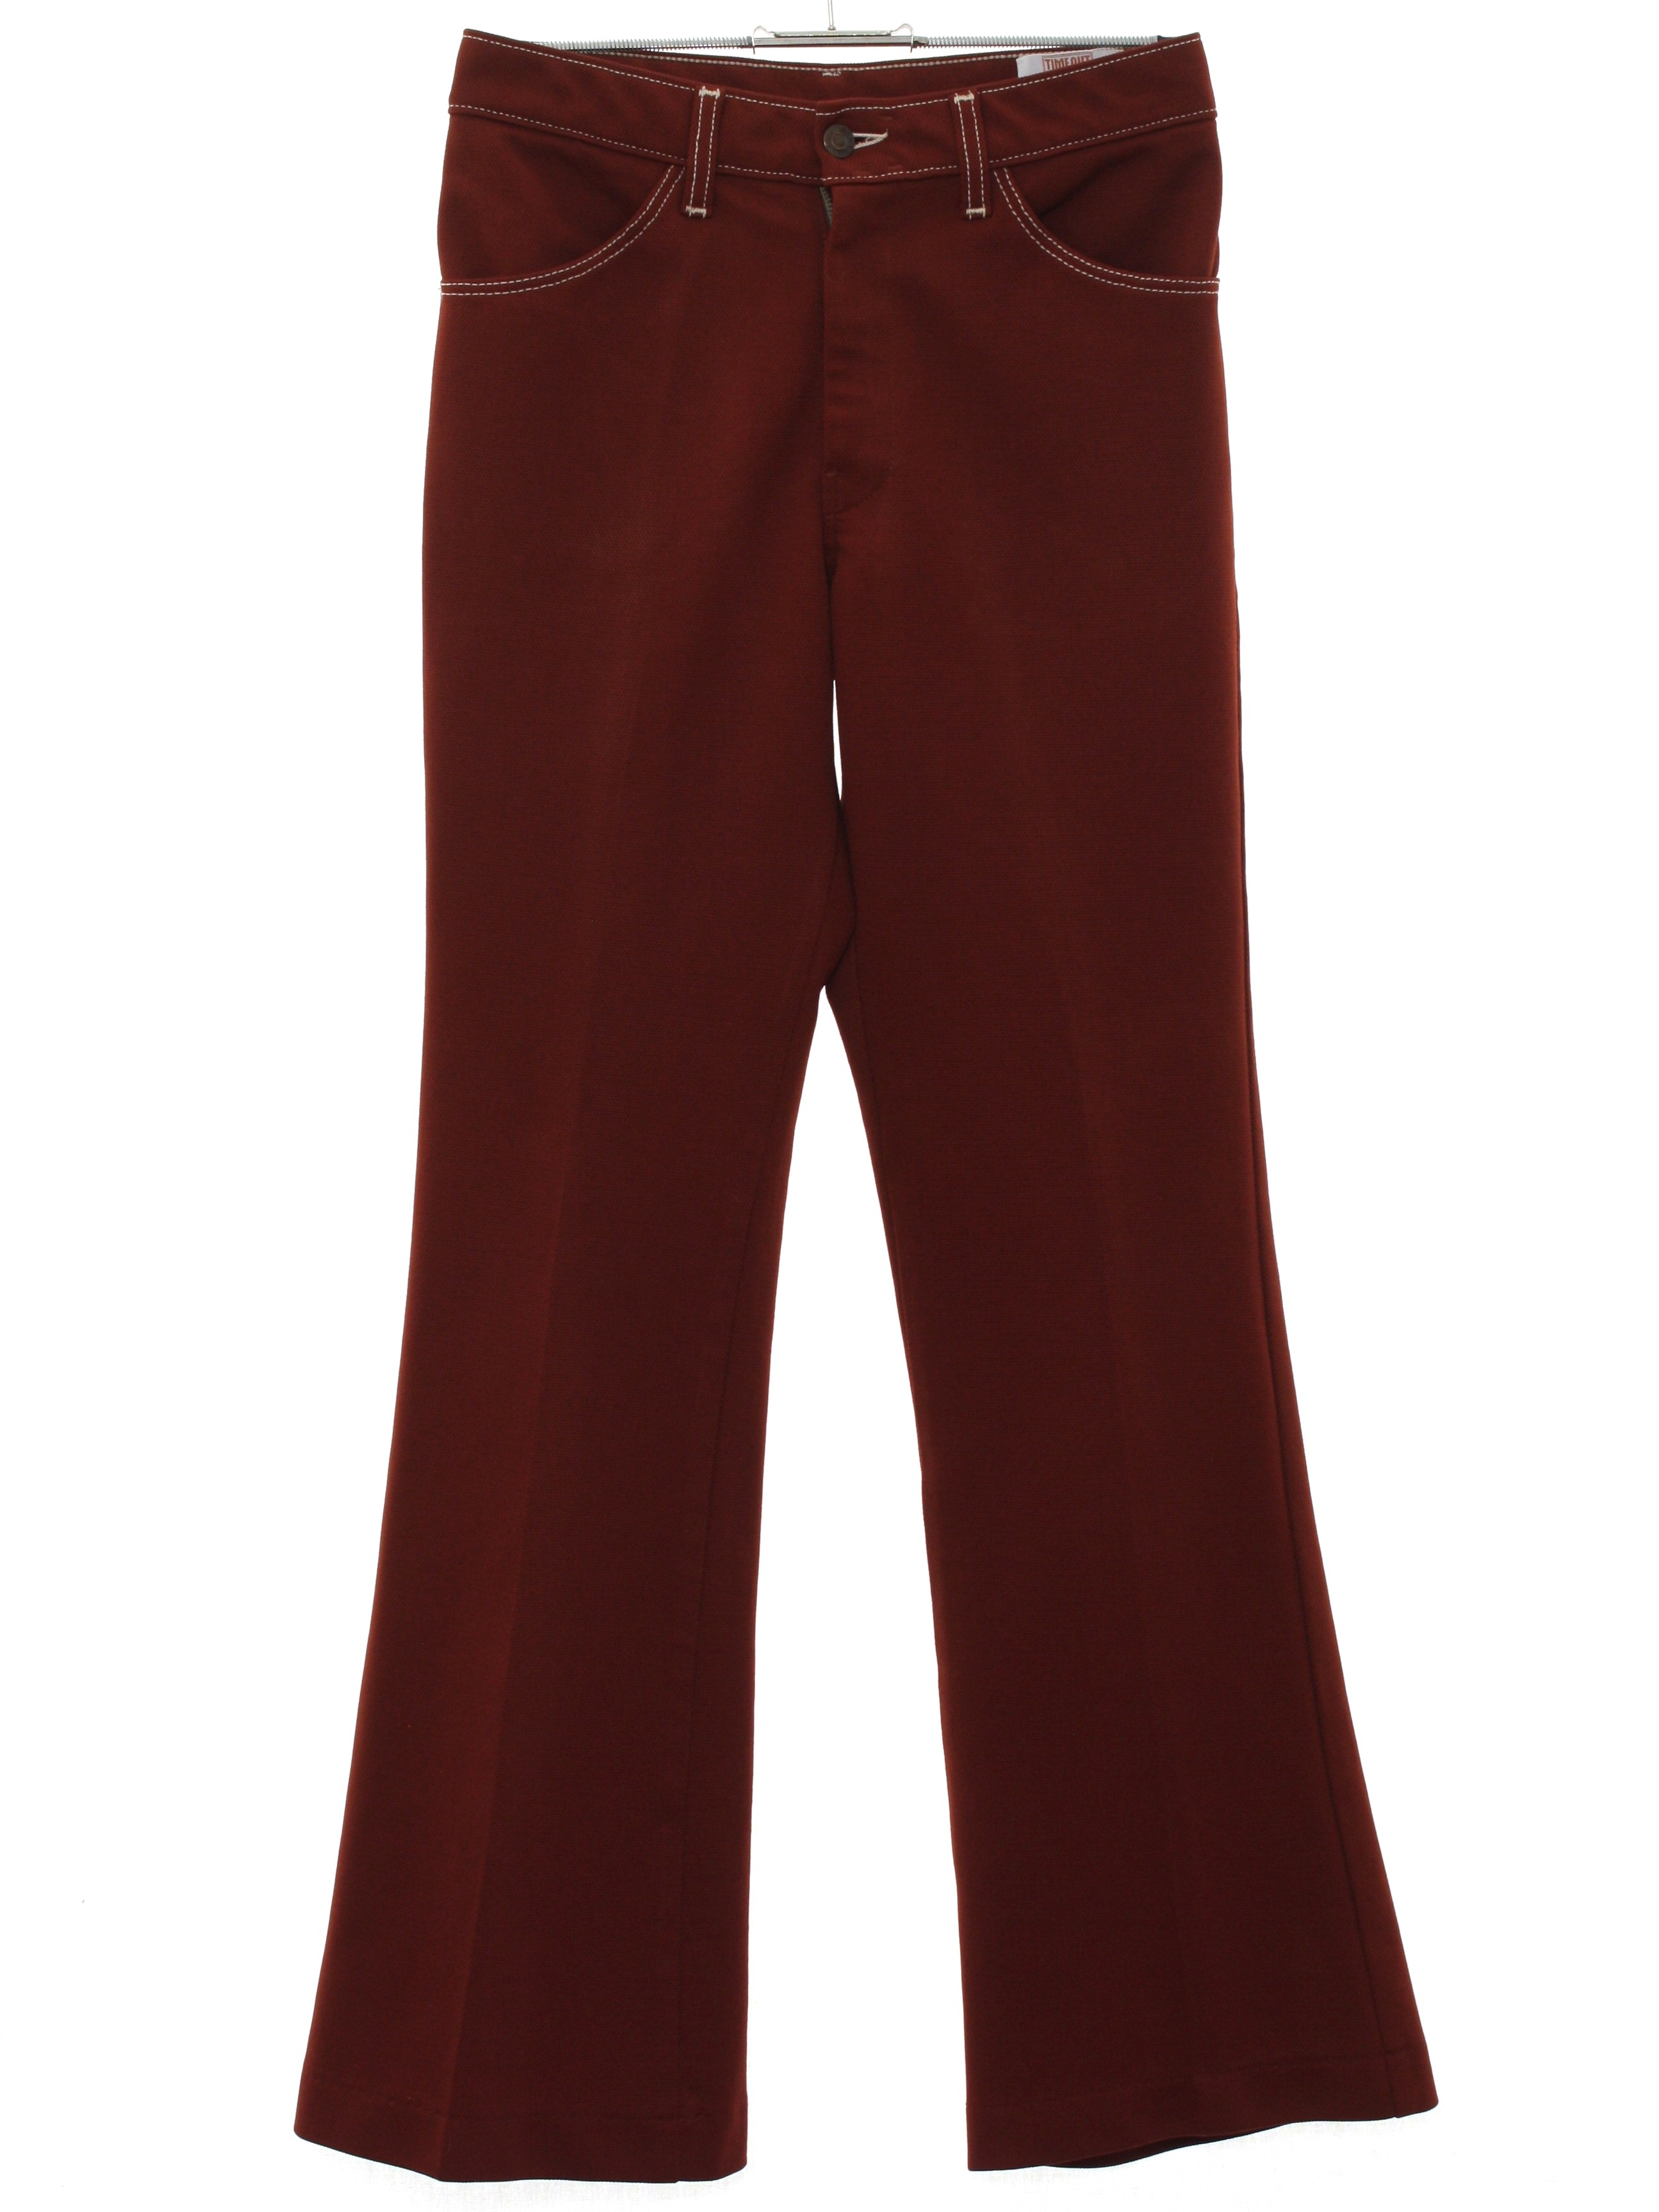 Farah 1970s Vintage Bellbottom Pants: 70s -Farah- Mens deep burnt ...